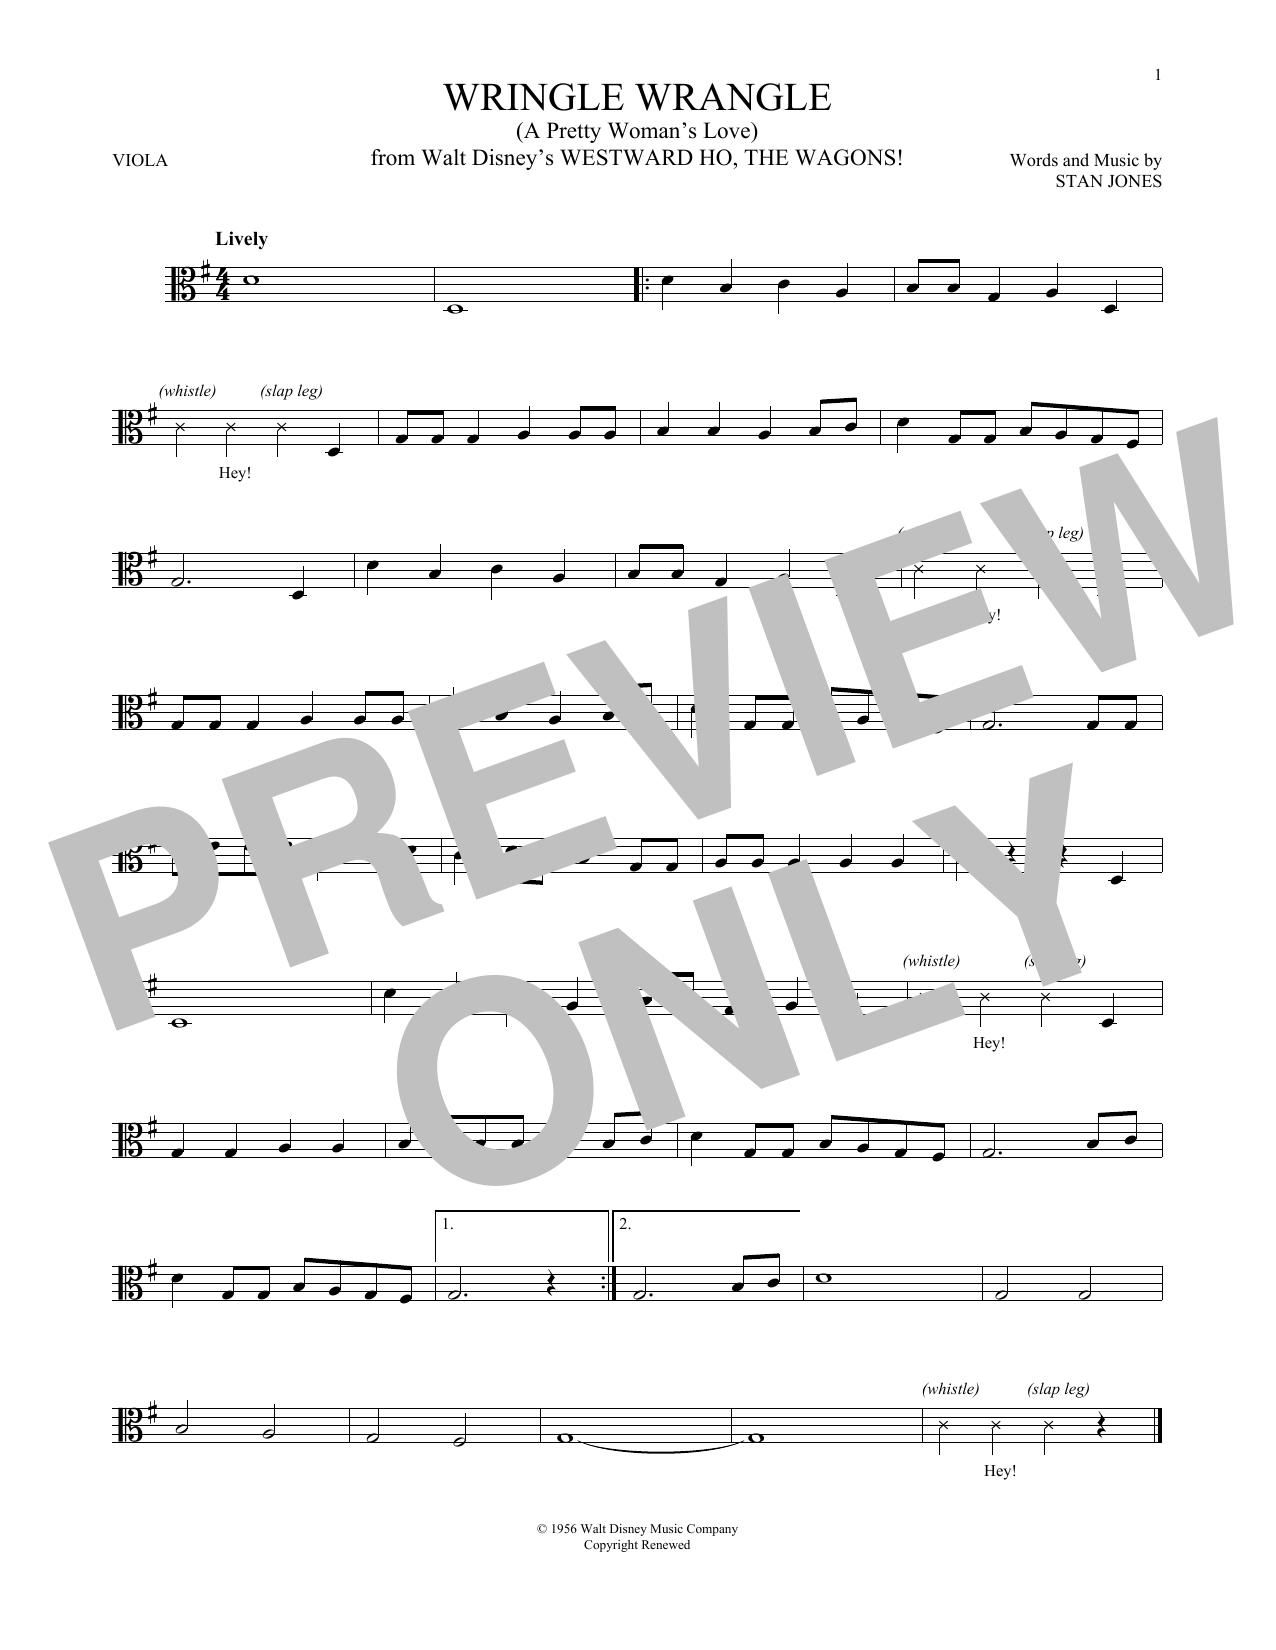 Stan Jones Wringle Wrangle (A Pretty Woman's Love) Sheet Music Notes & Chords for Viola - Download or Print PDF